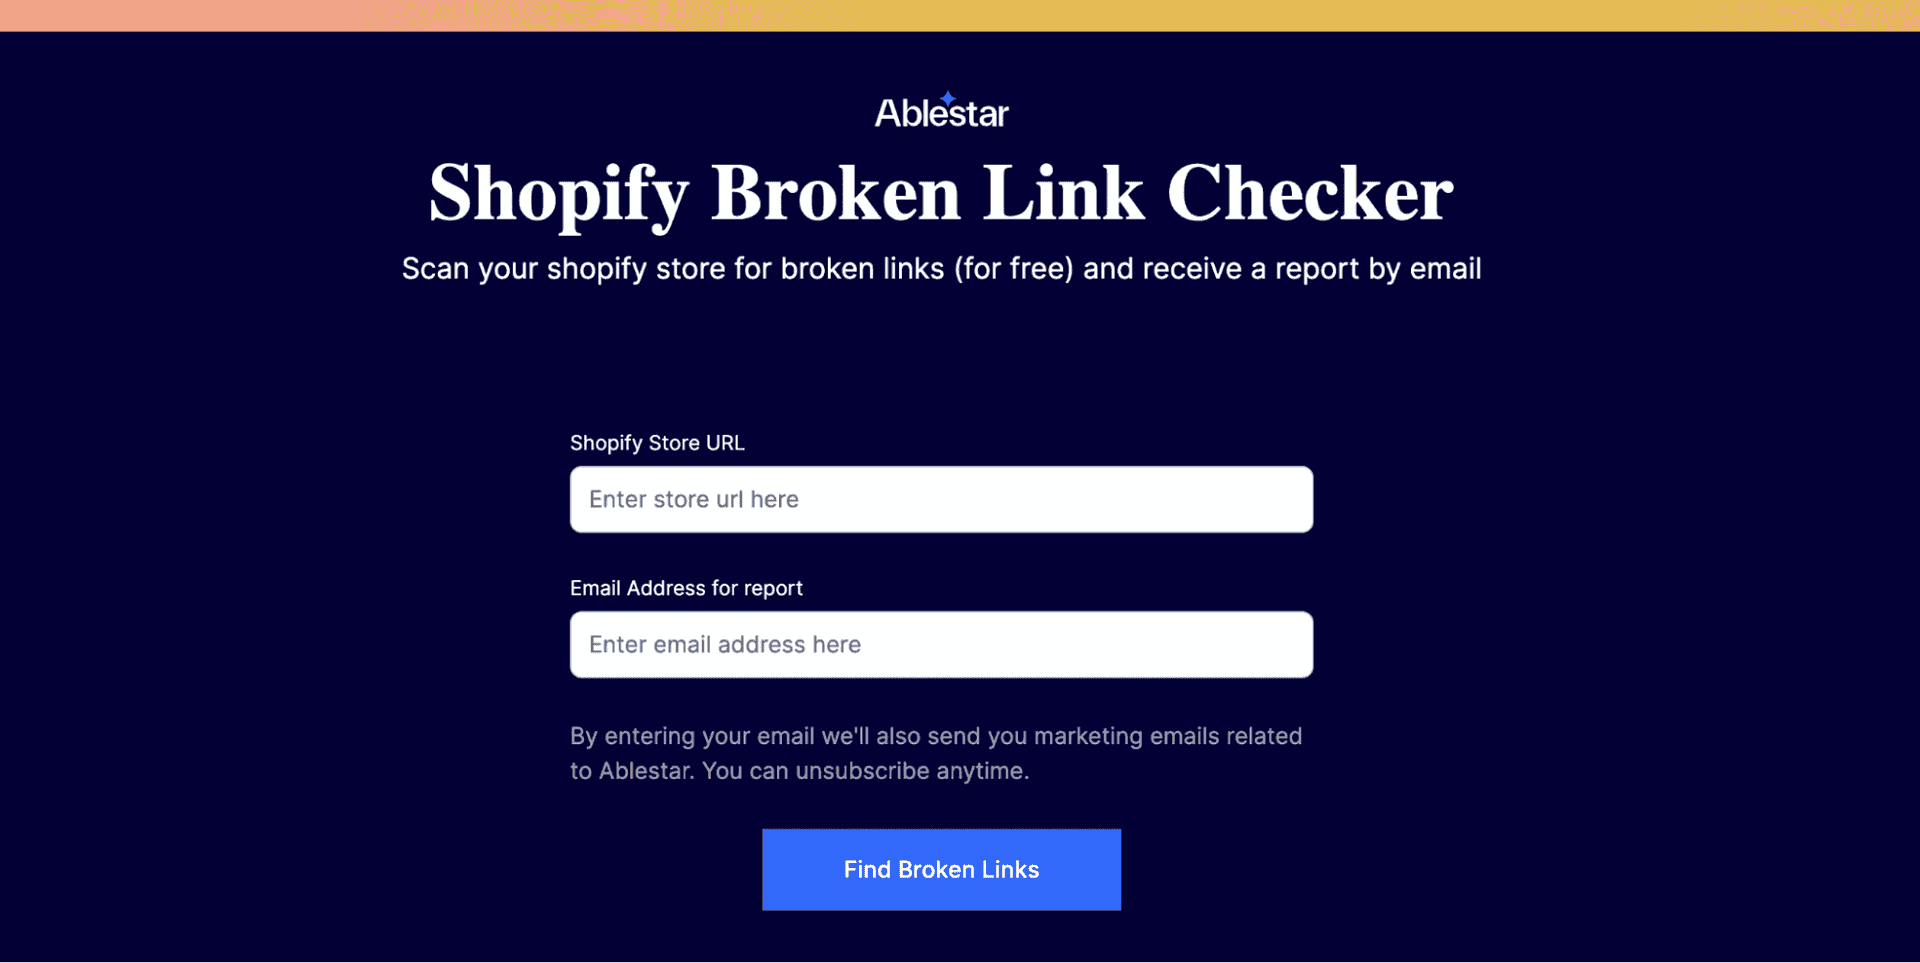 Shopify broken link checker by Ablestar